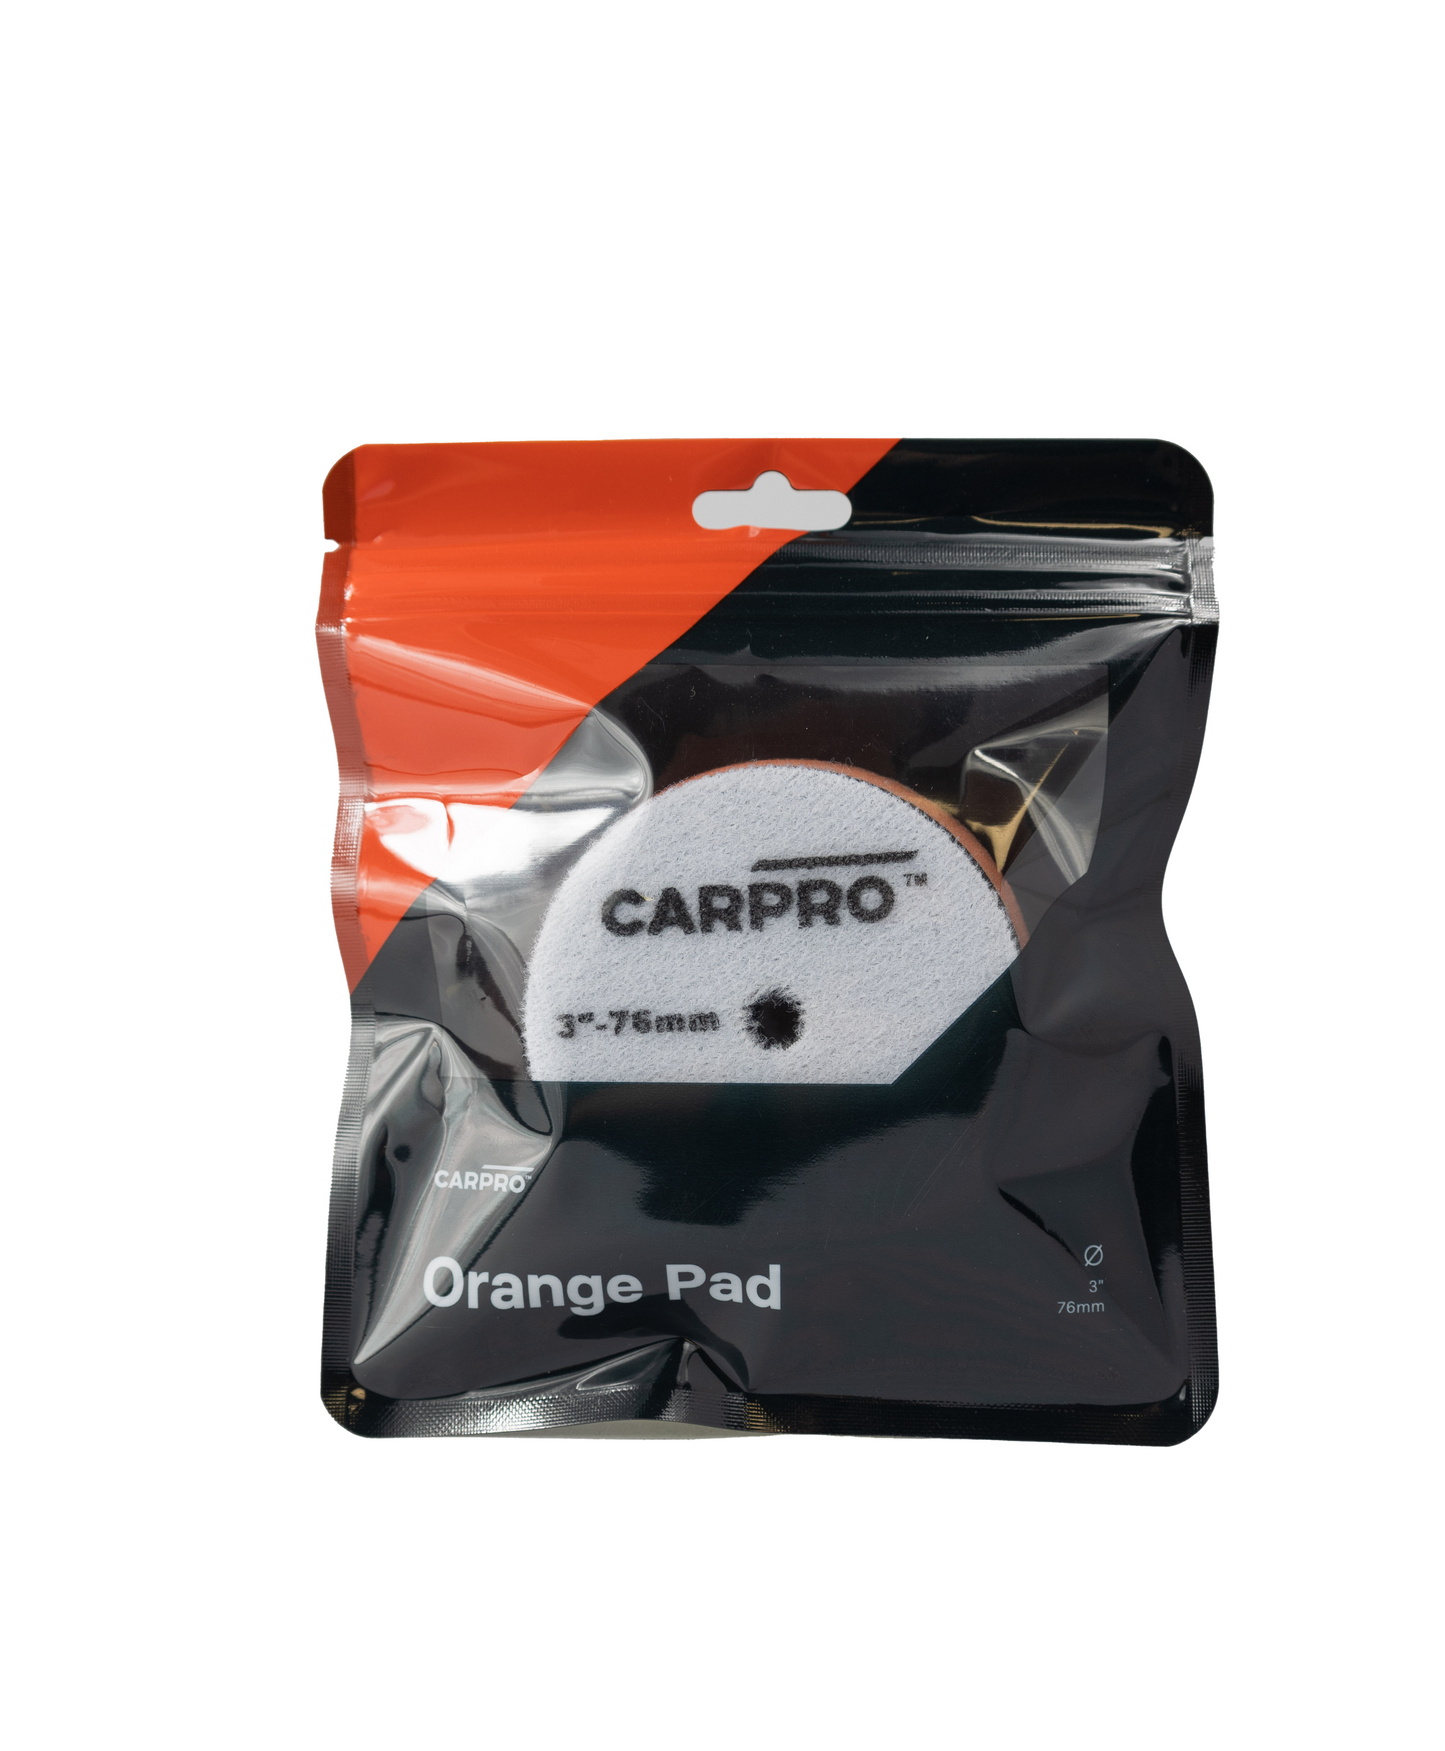 Carpro Orange Pad